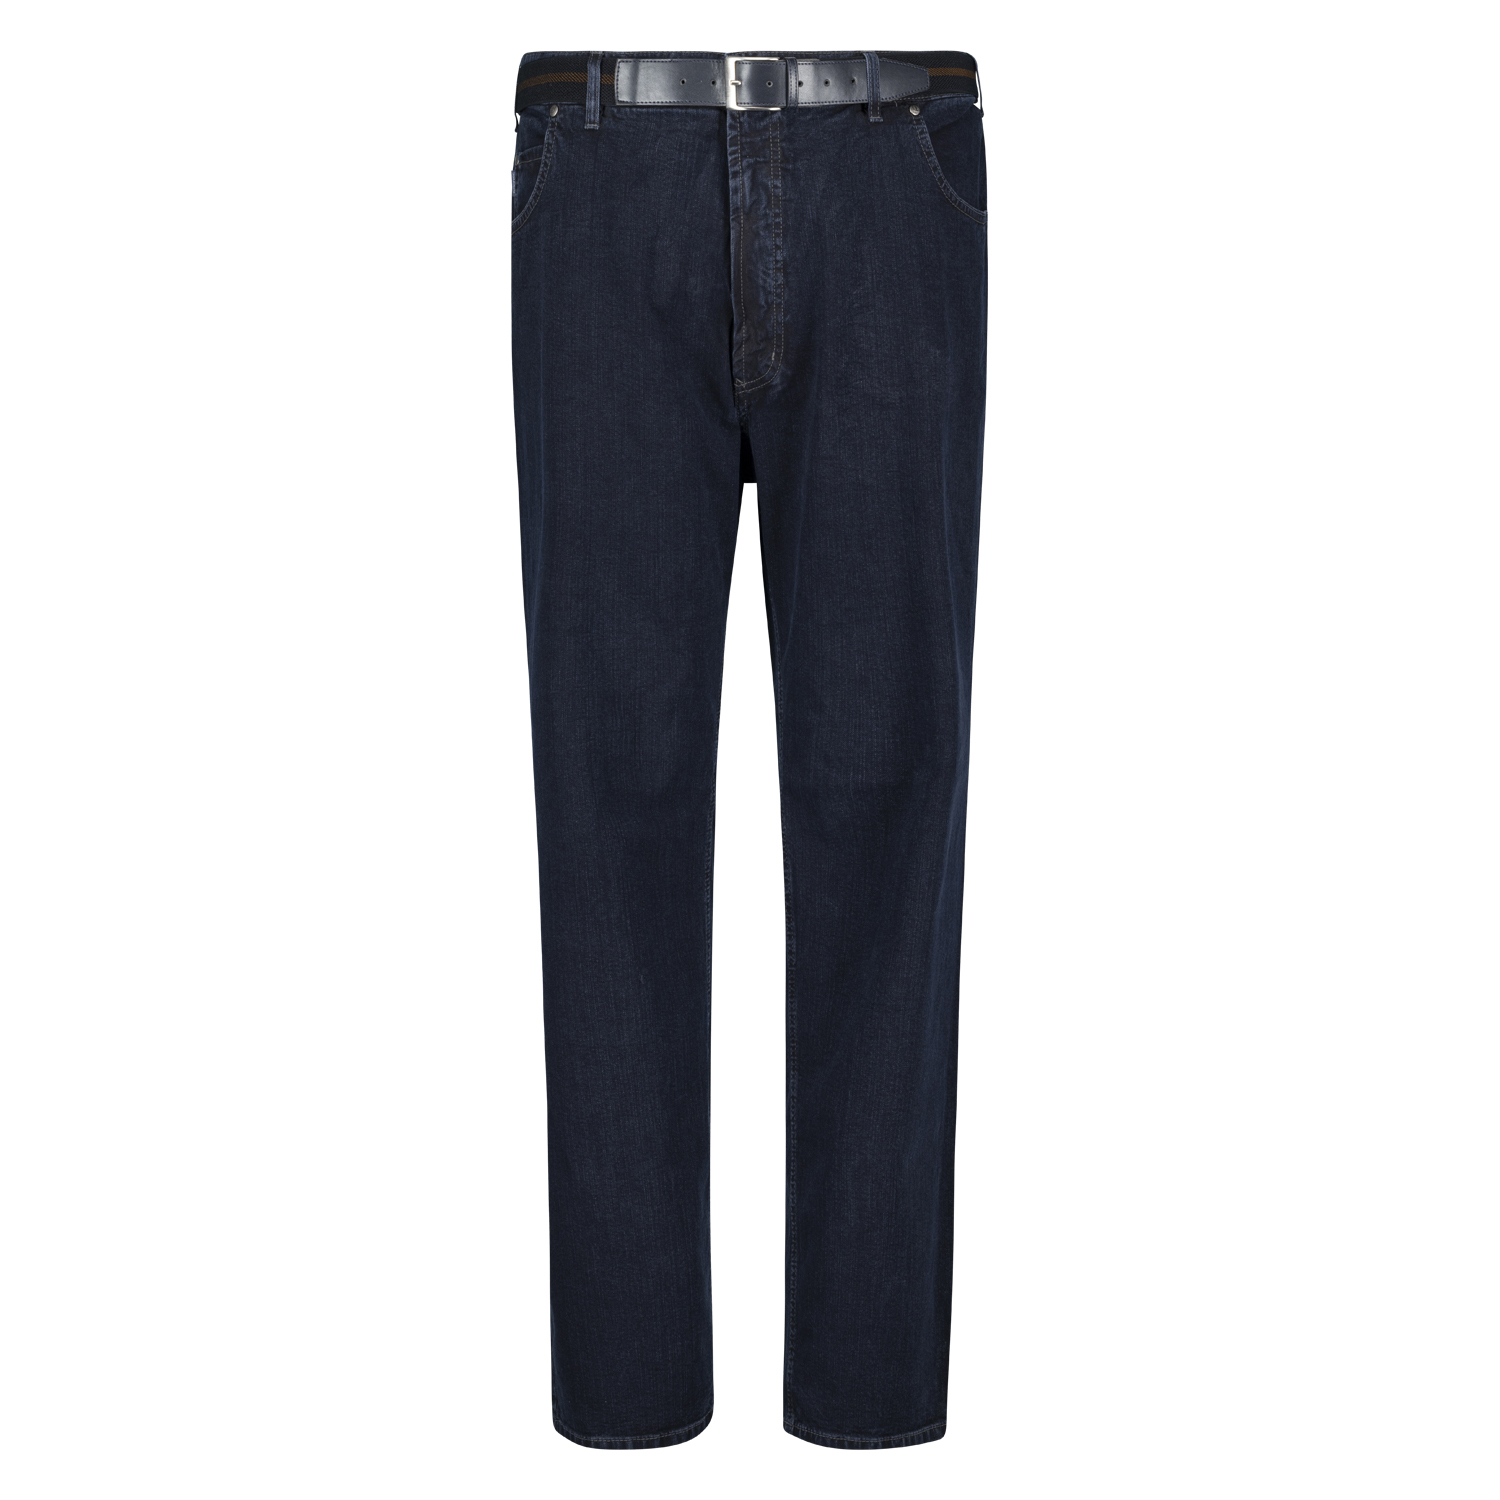 Five pocket jeans model "Peter" by Pioneer in oversize dark blue (low rise): 28 - 40